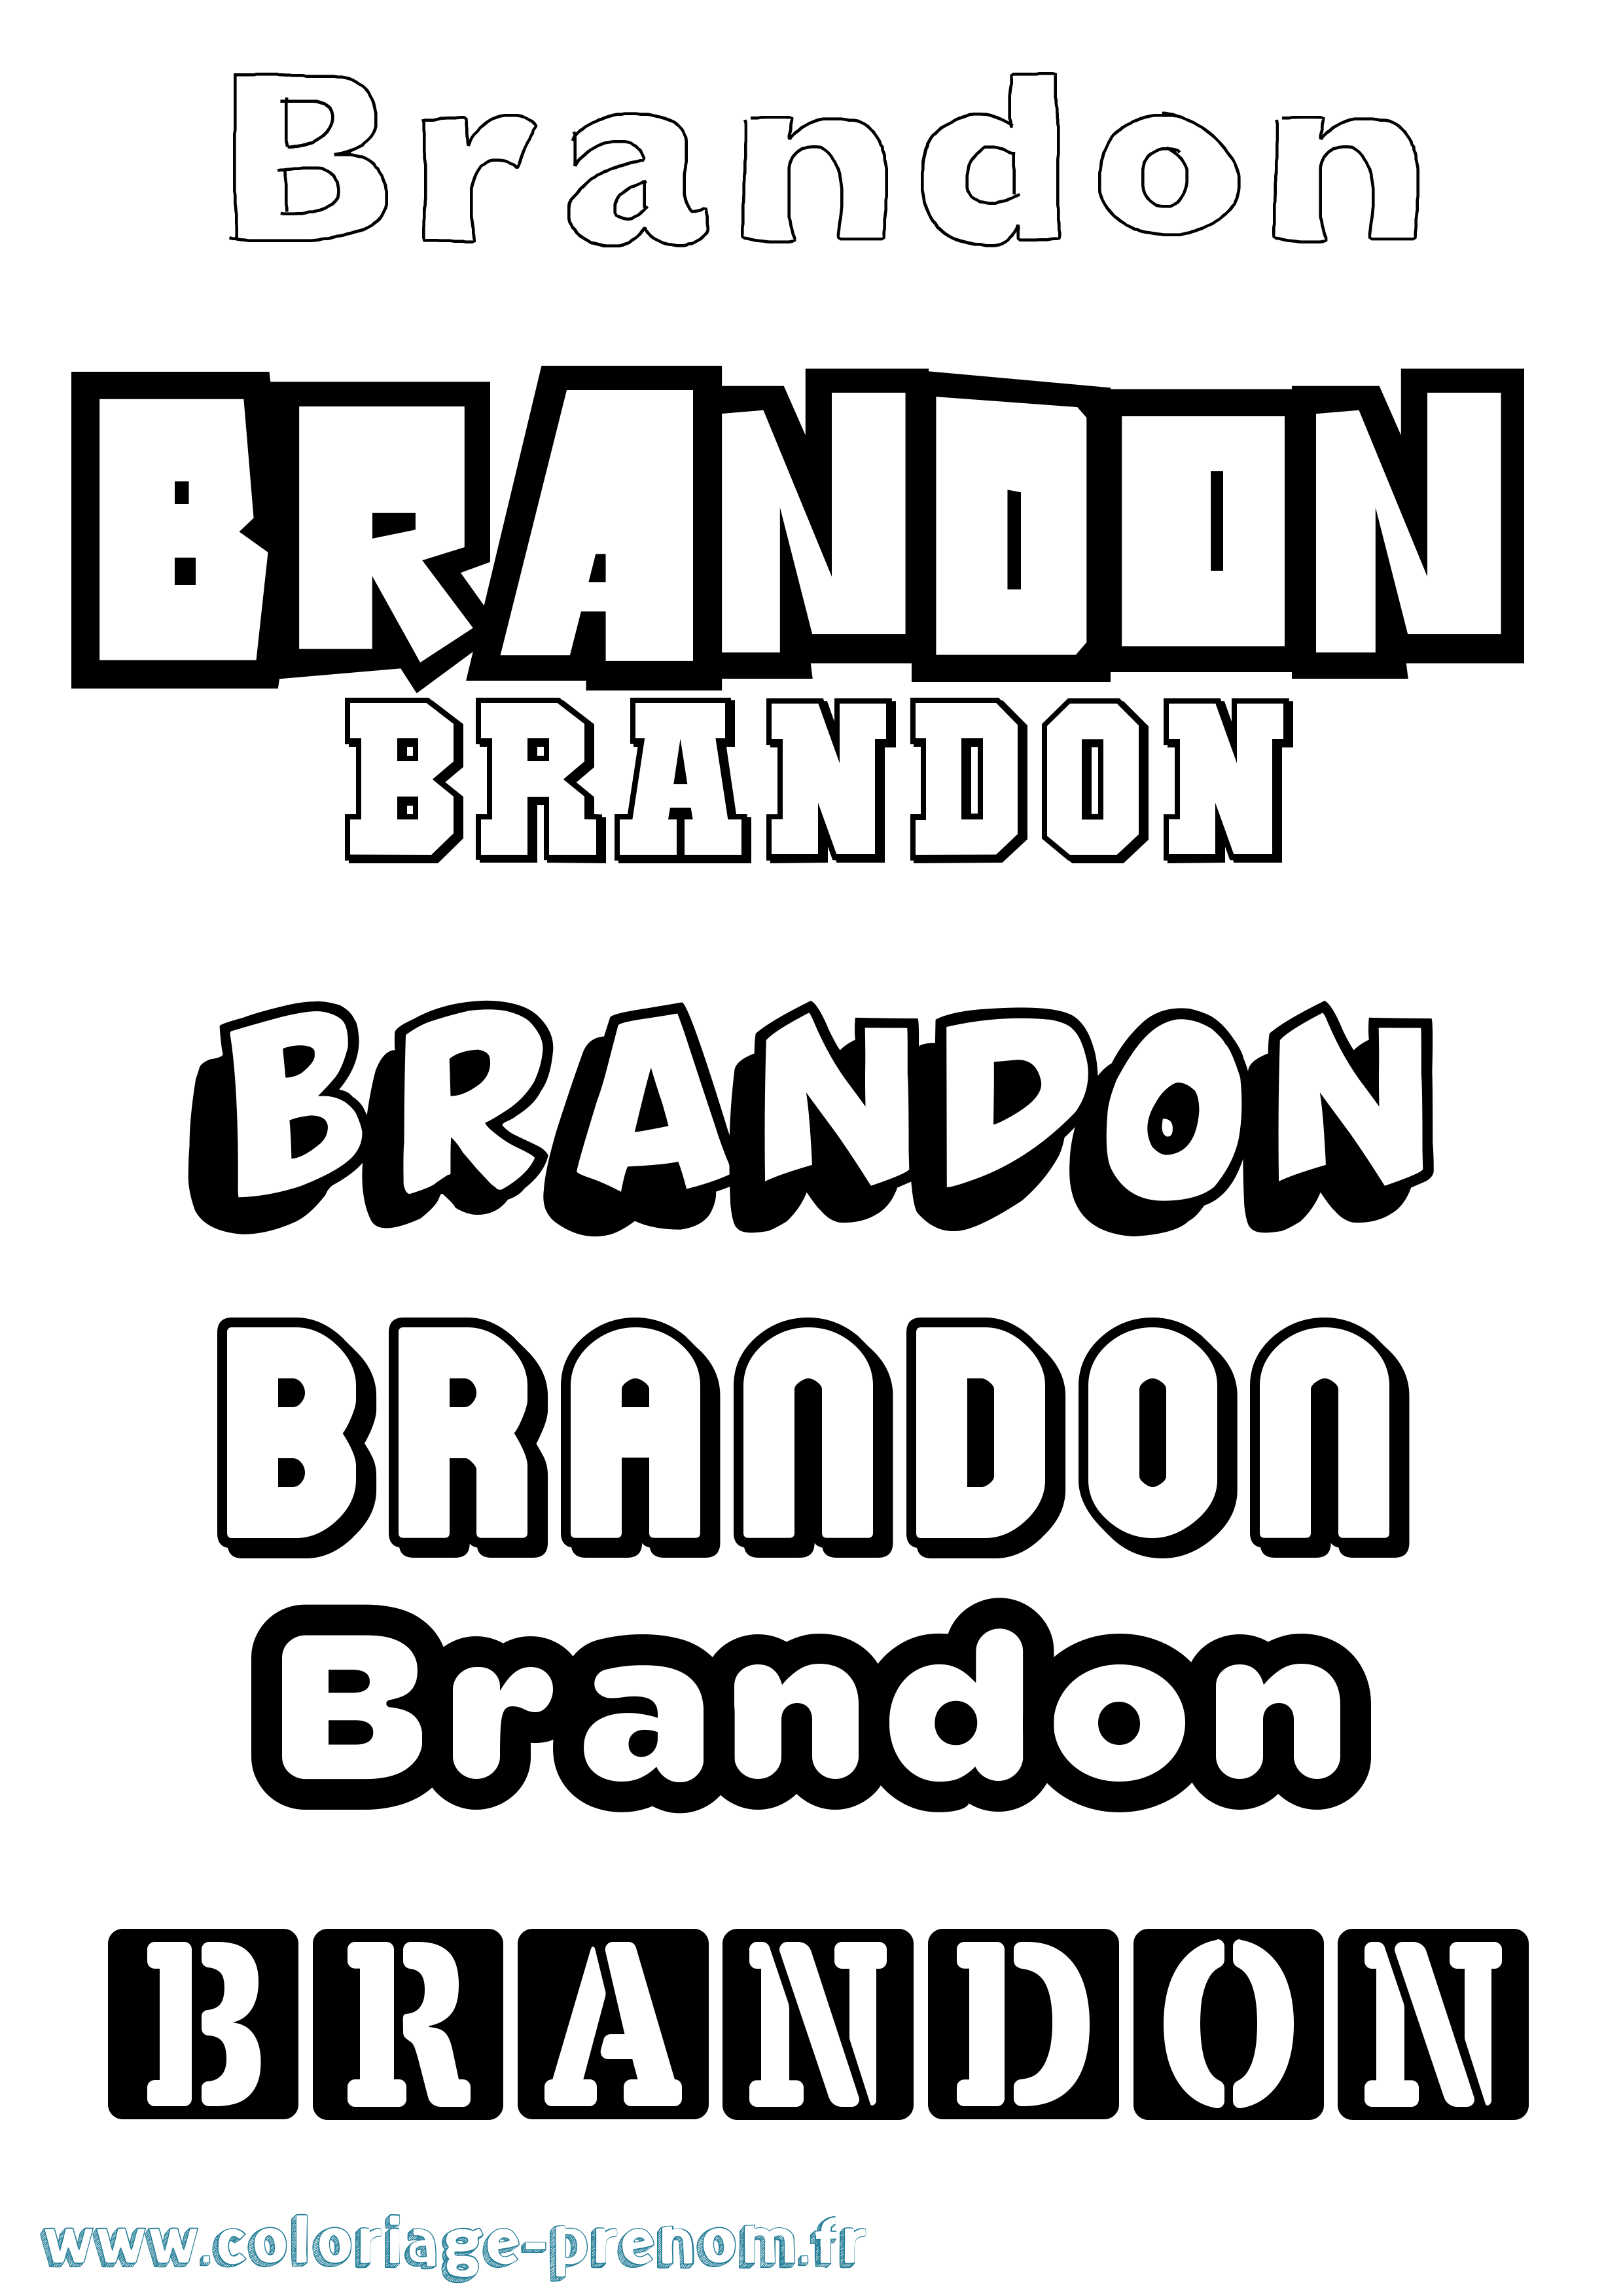 Coloriage prénom Brandon